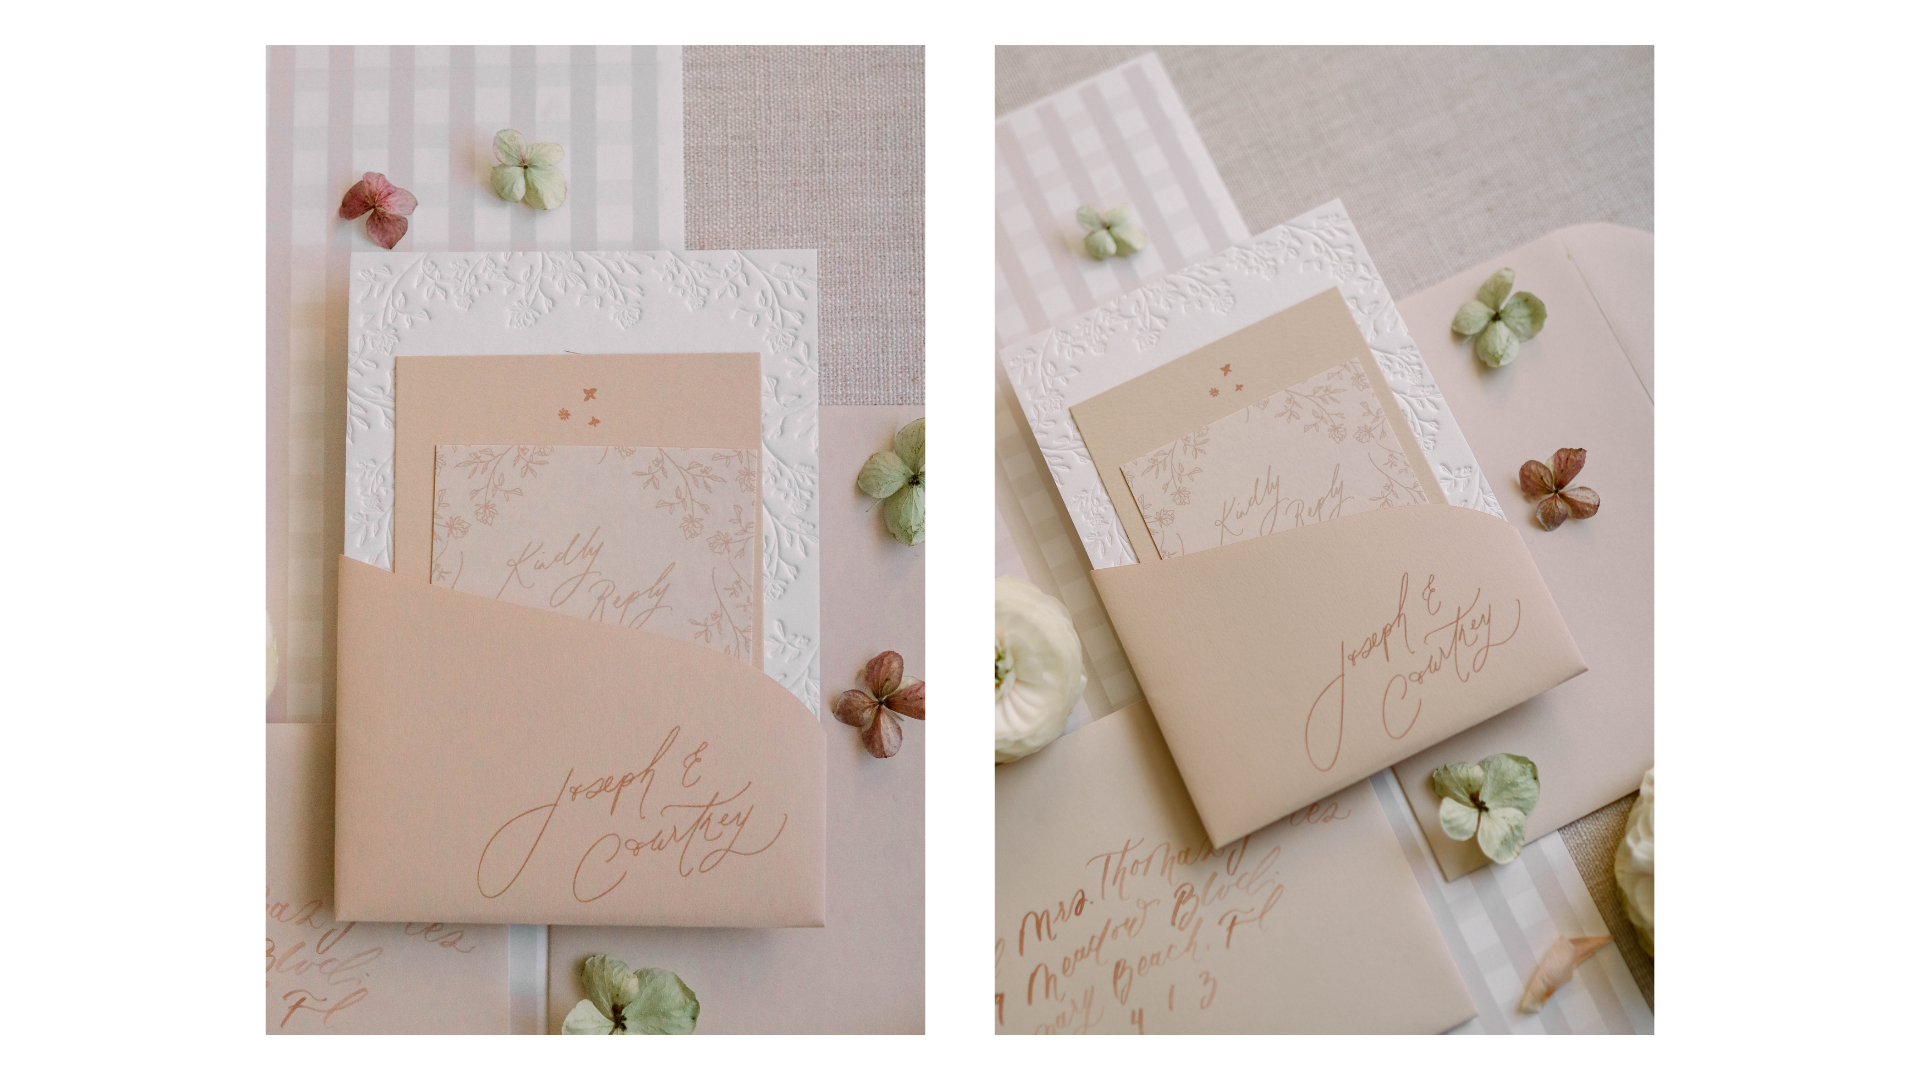 Rosemary Beach wedding invitations 